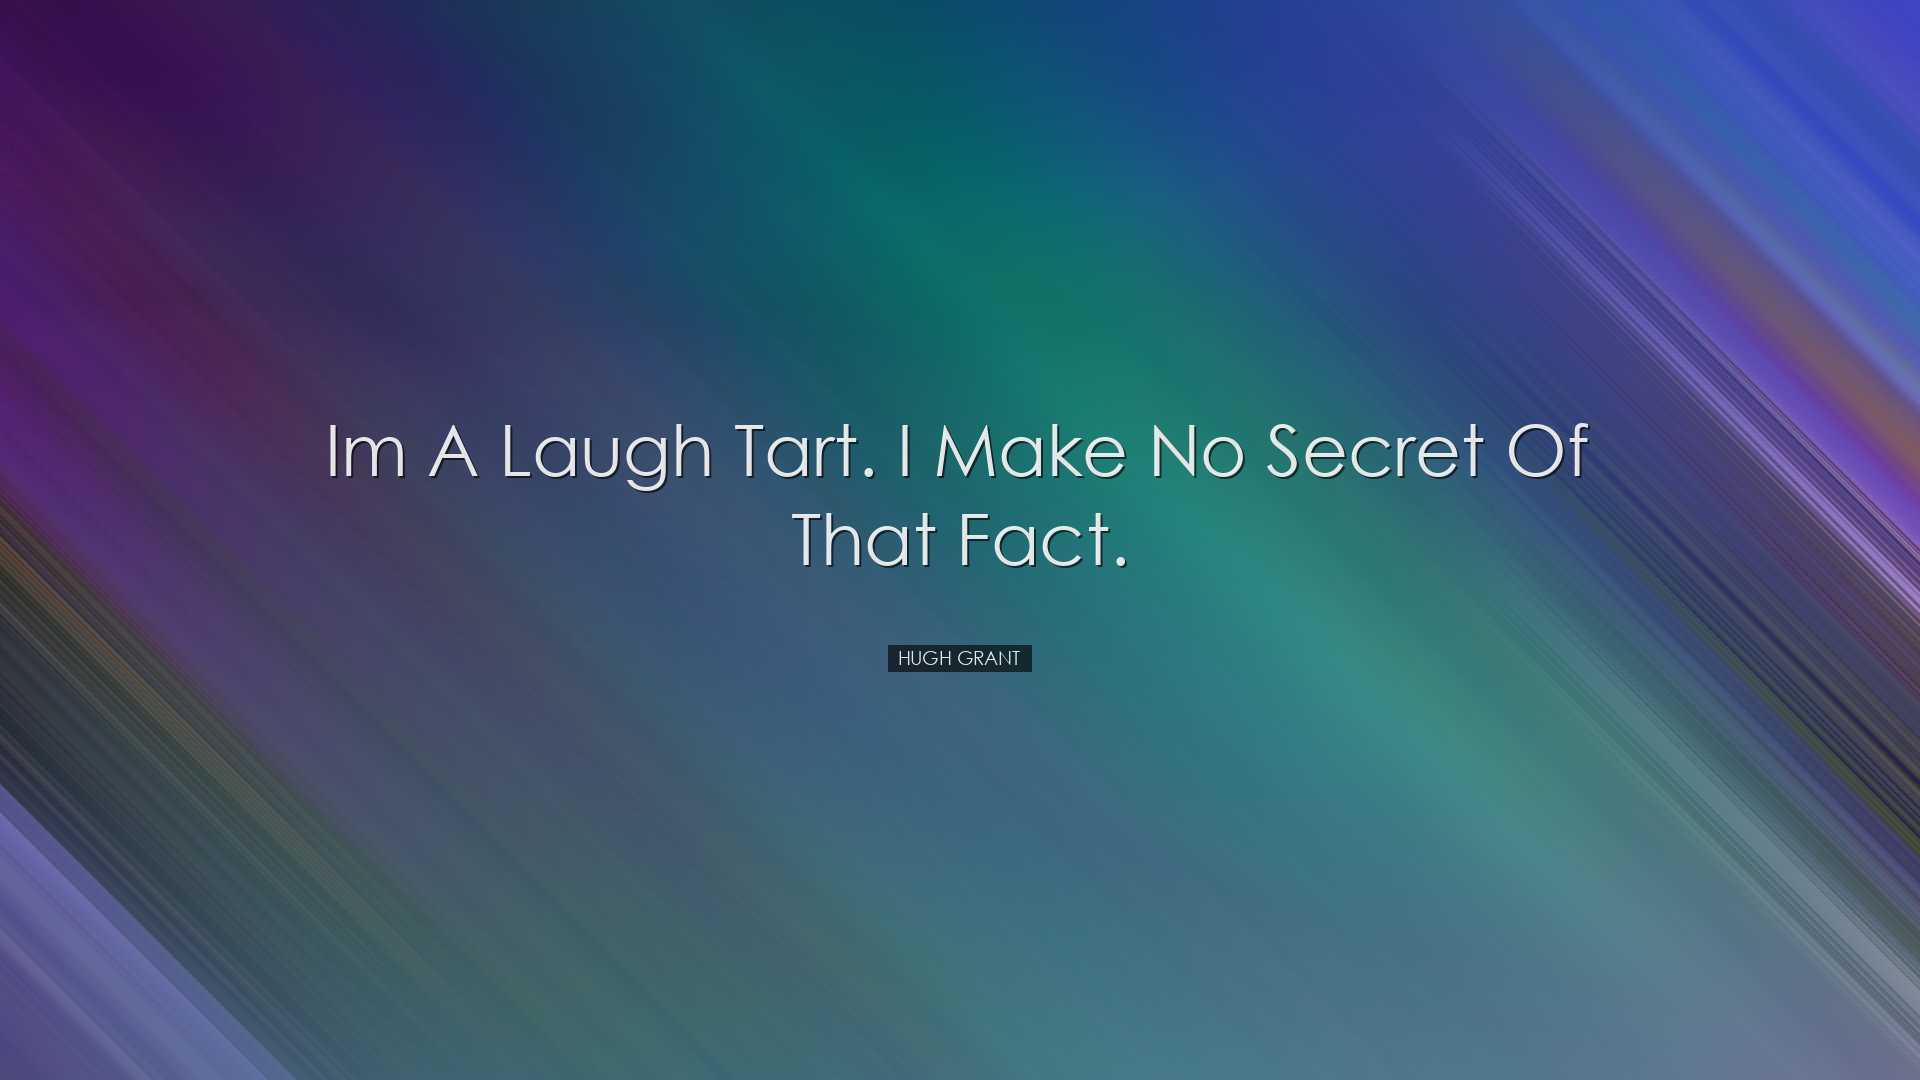 Im a laugh tart. I make no secret of that fact. - Hugh Grant